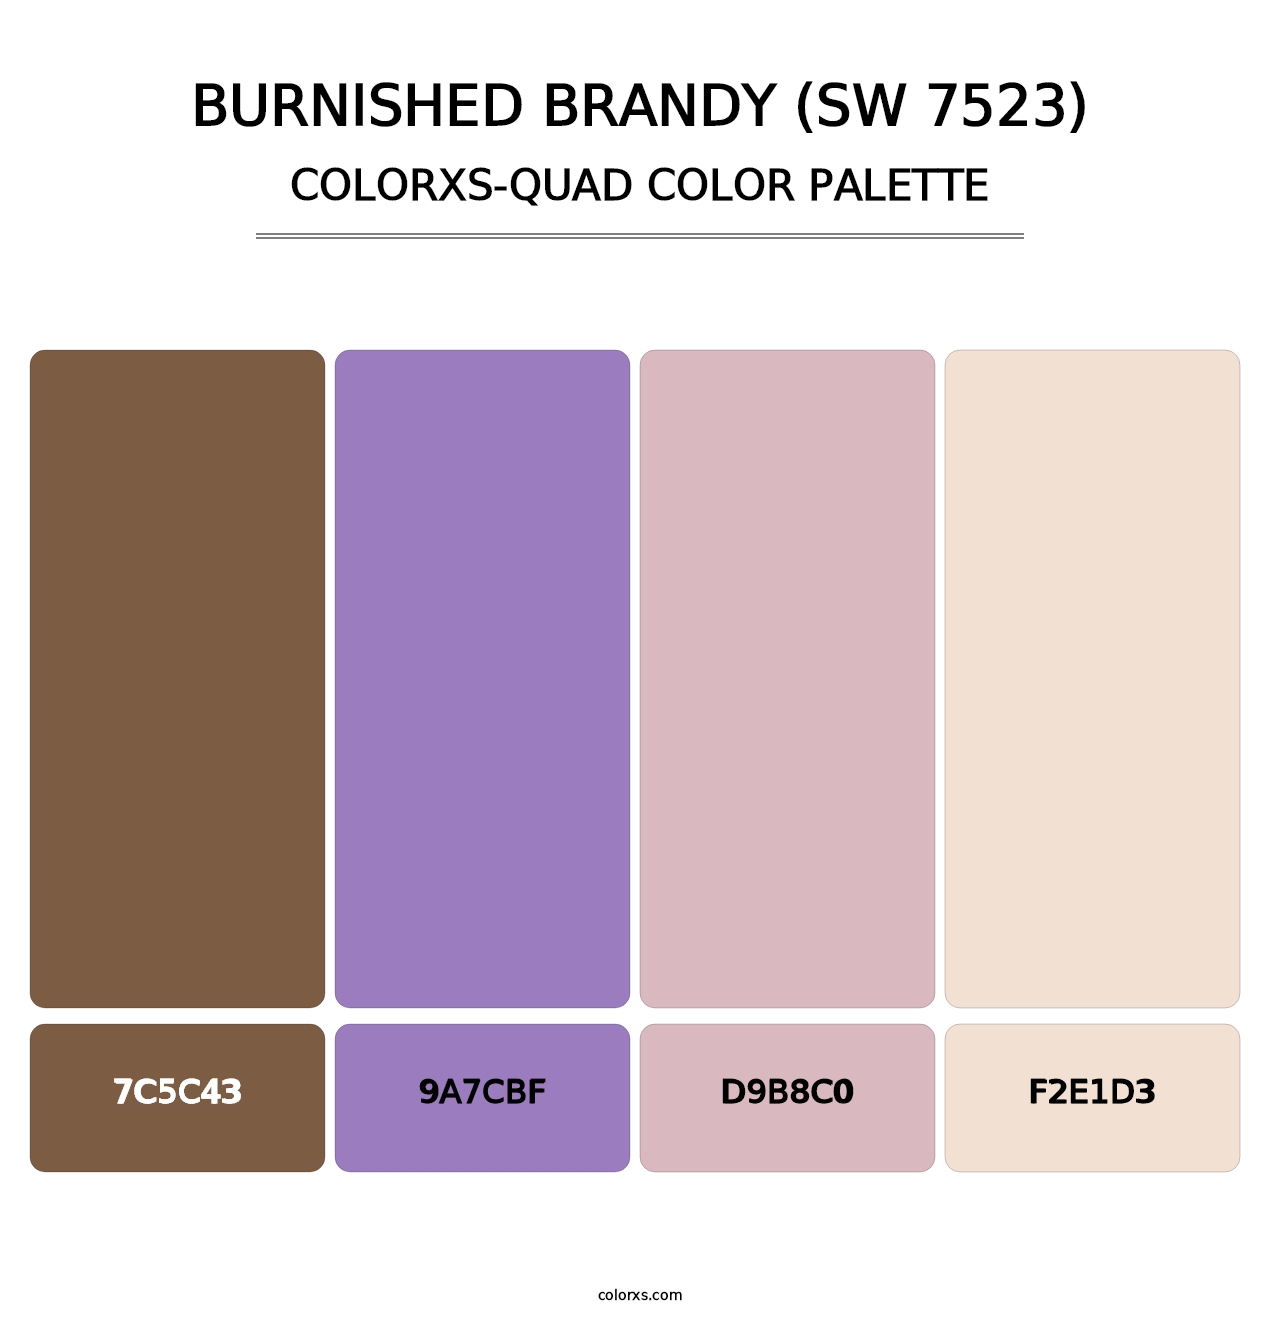 Burnished Brandy (SW 7523) - Colorxs Quad Palette